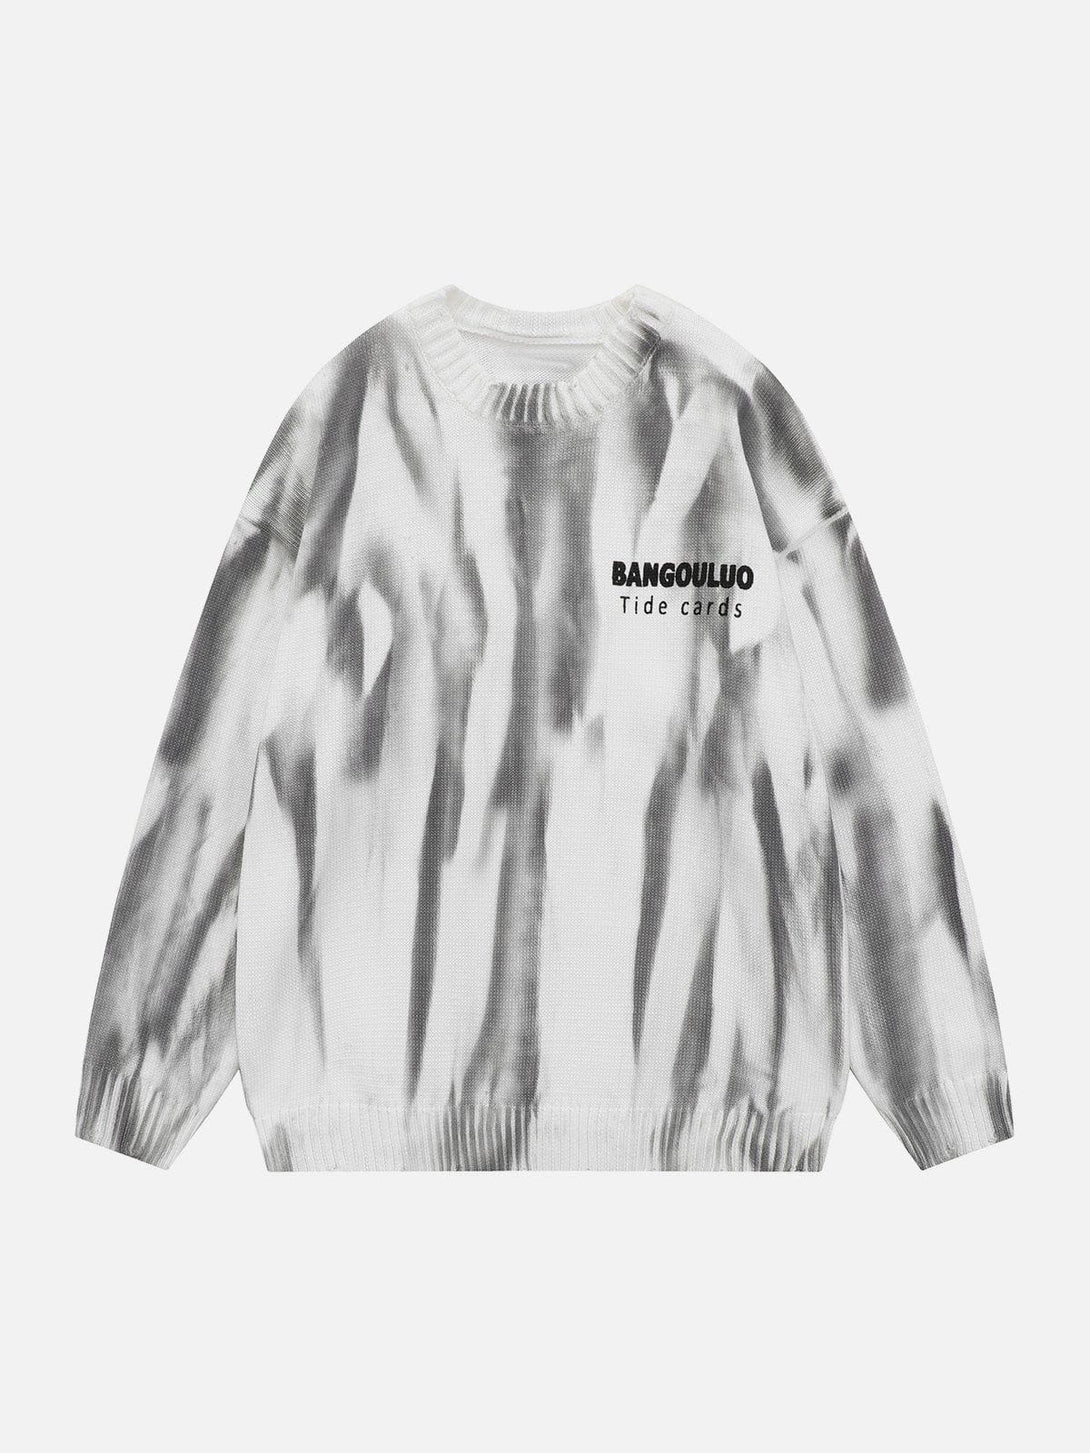 AlanBalen® - Smoke Print Pullover Sweater AlanBalen